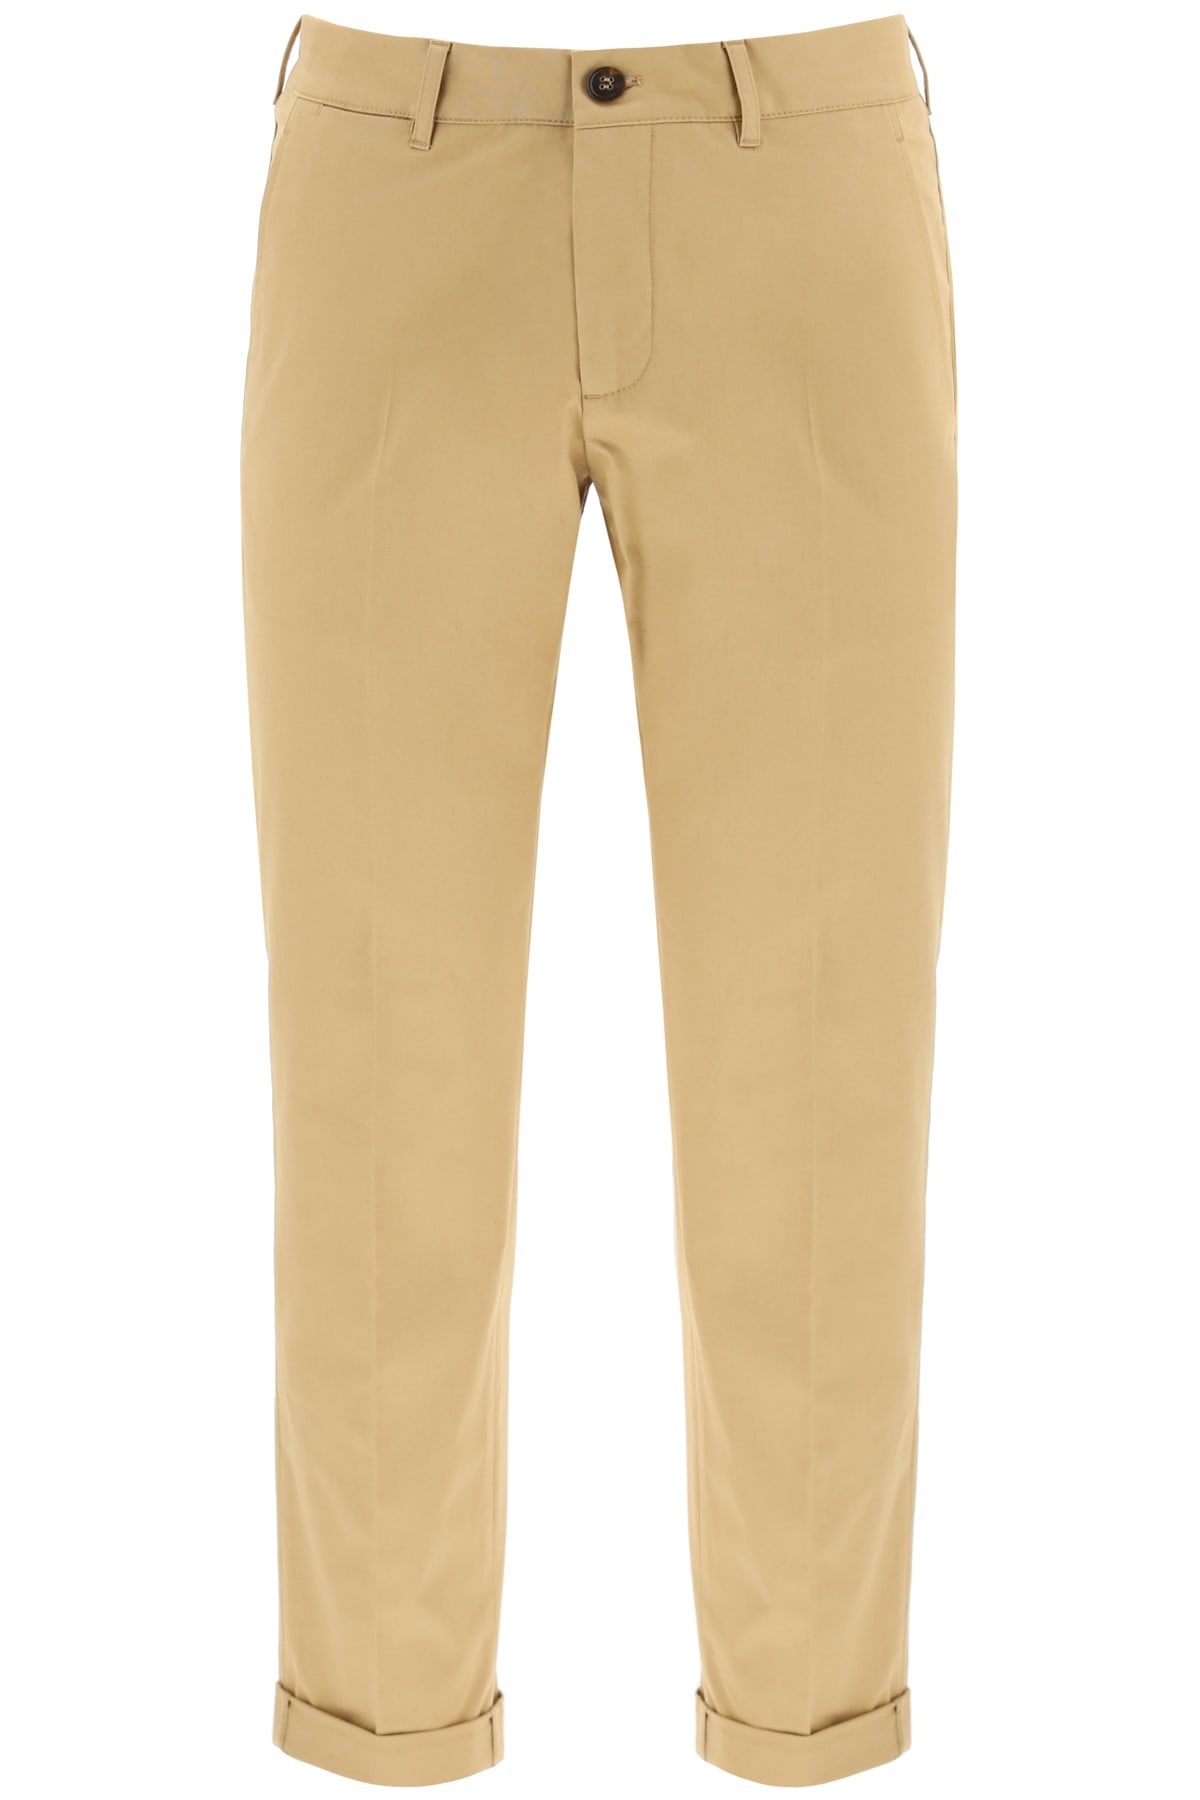 Golden Goose Conrad Chino Trousers